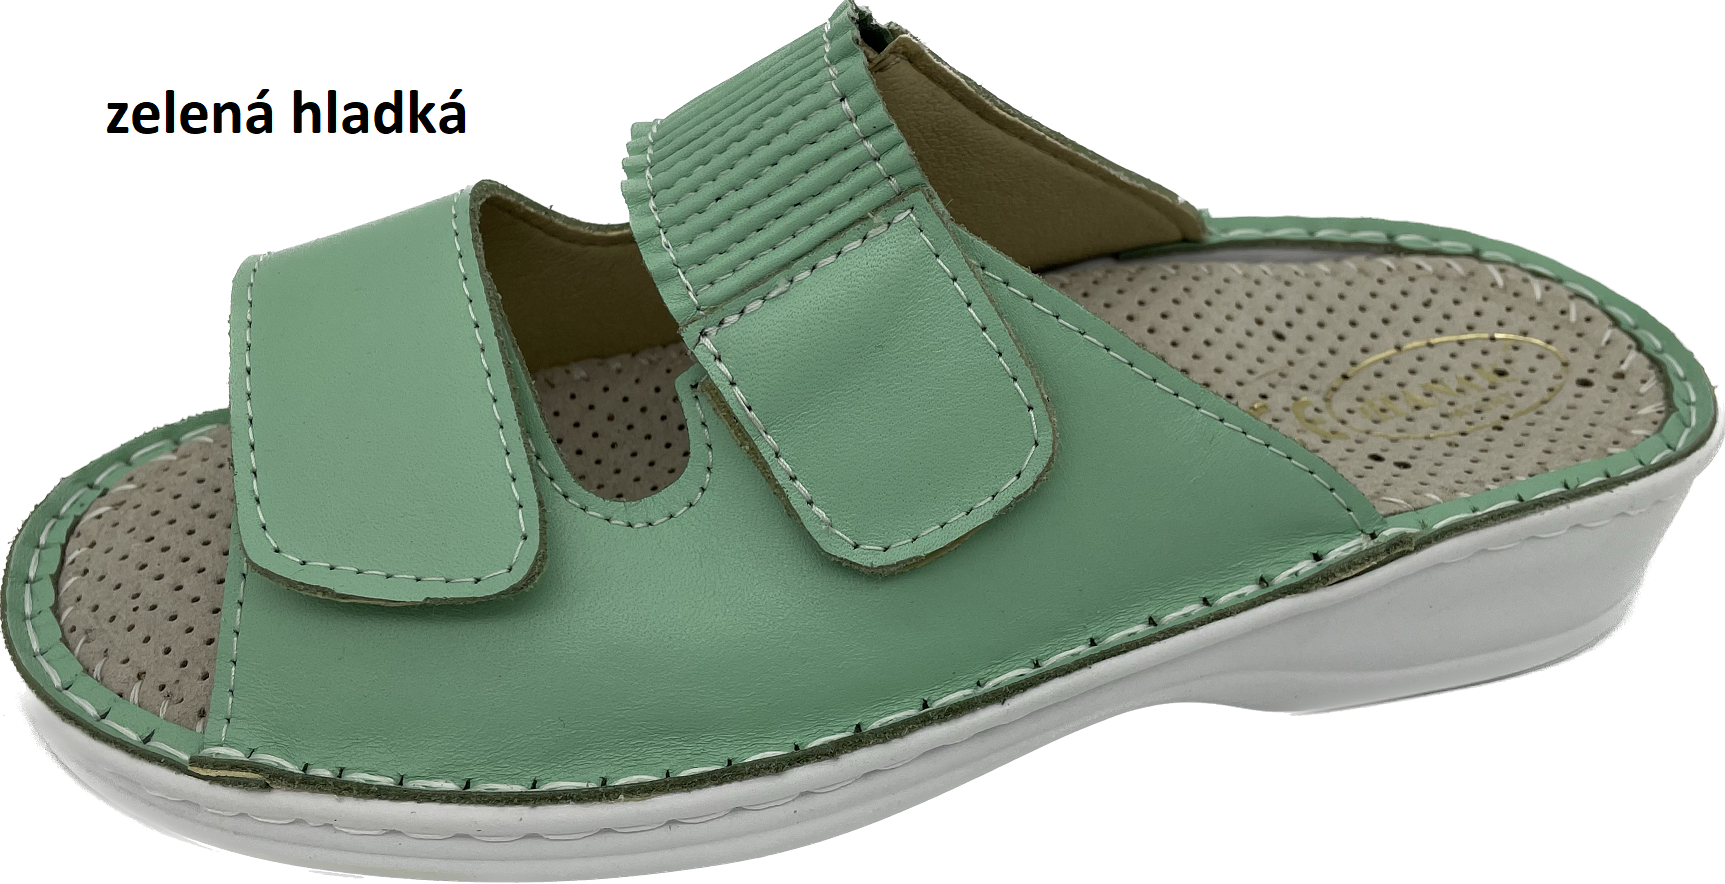 Boty Hanák vzor 304 - bílá podešev Barva usně: zelená hladká, Velikosti obuvi: 35